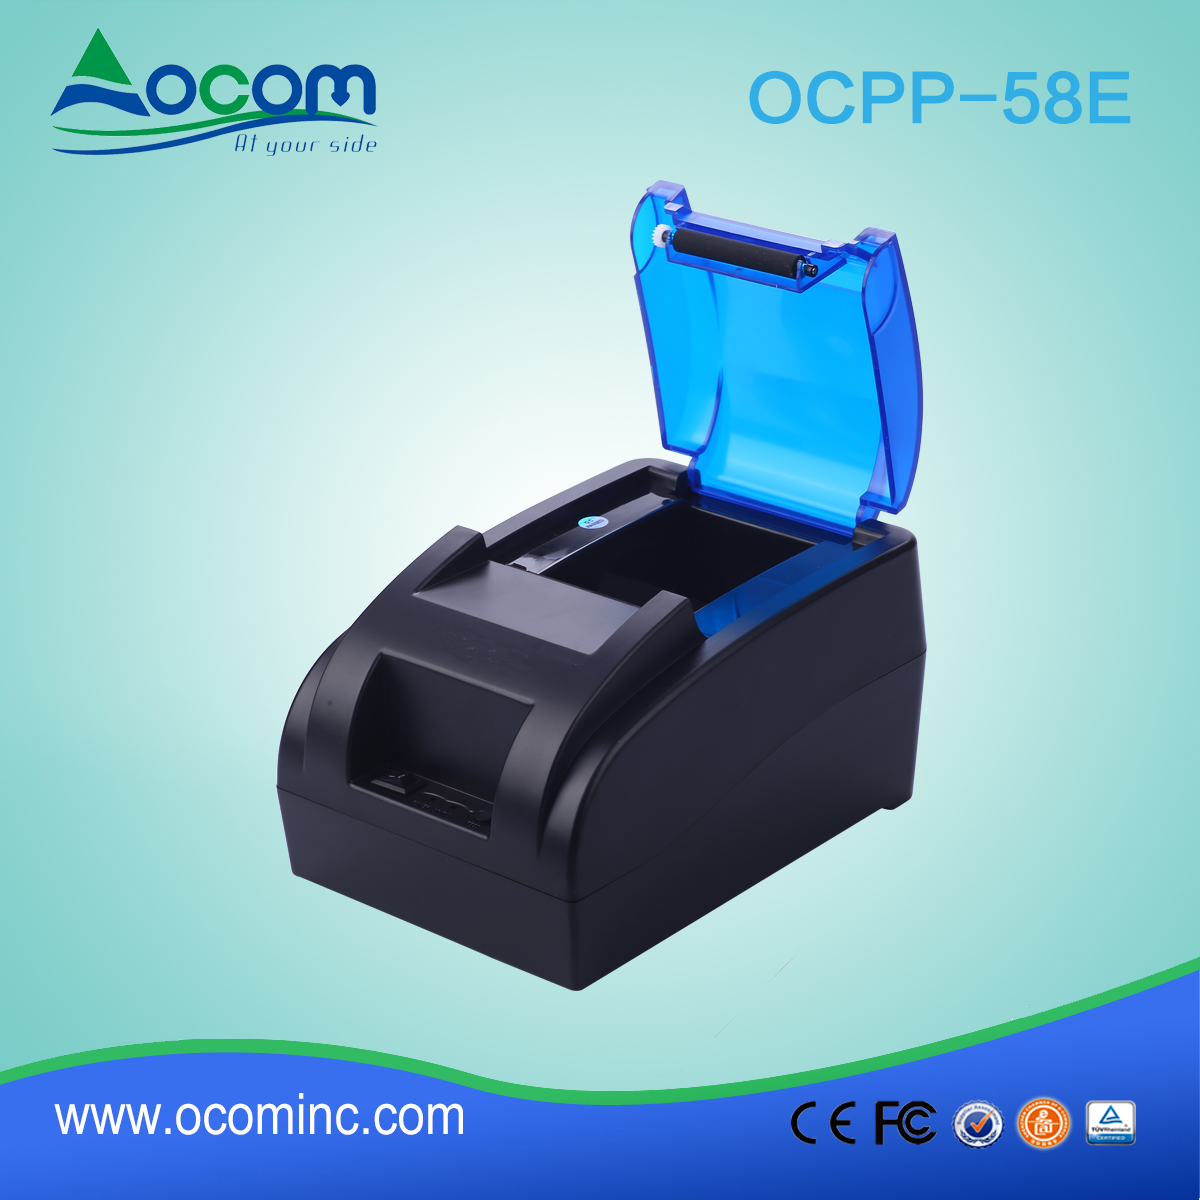 Impresora térmica de recibos de 58 mm con adaptador de corriente incorporado OCPP-58E-BT